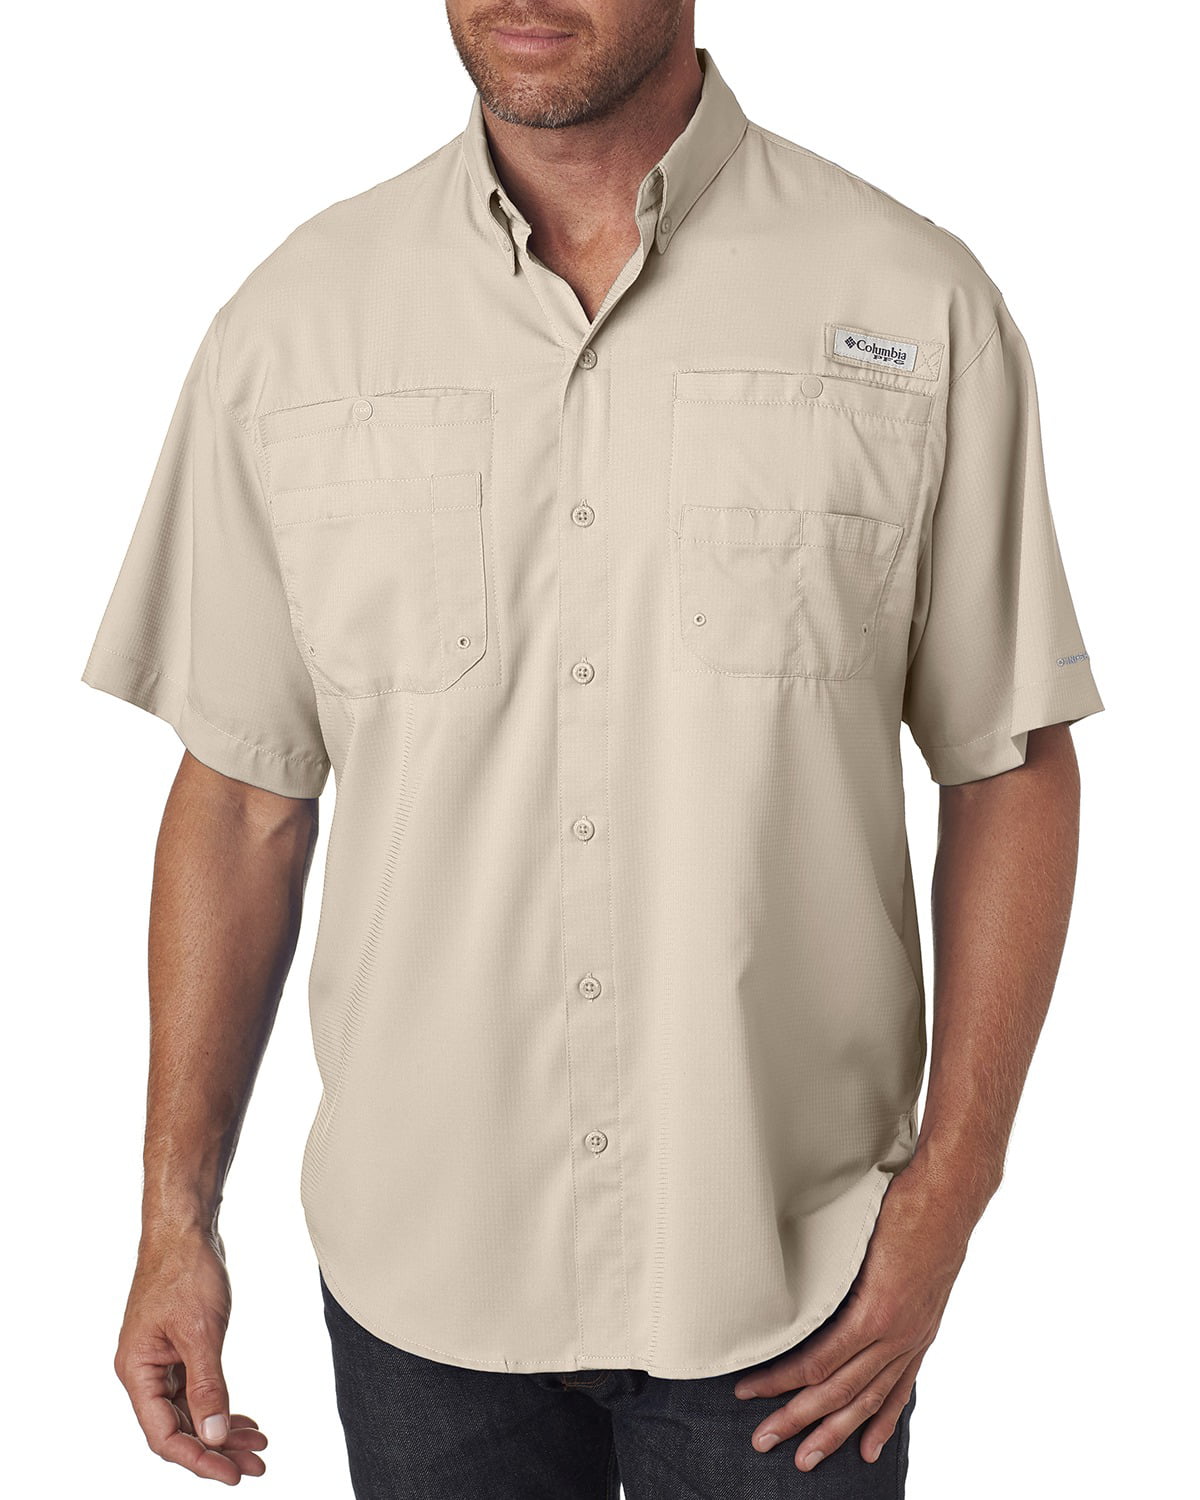 Columbia - 7266 Men's Tamiami II Short-Sleeve Shirt - Fossil - 2XL ...